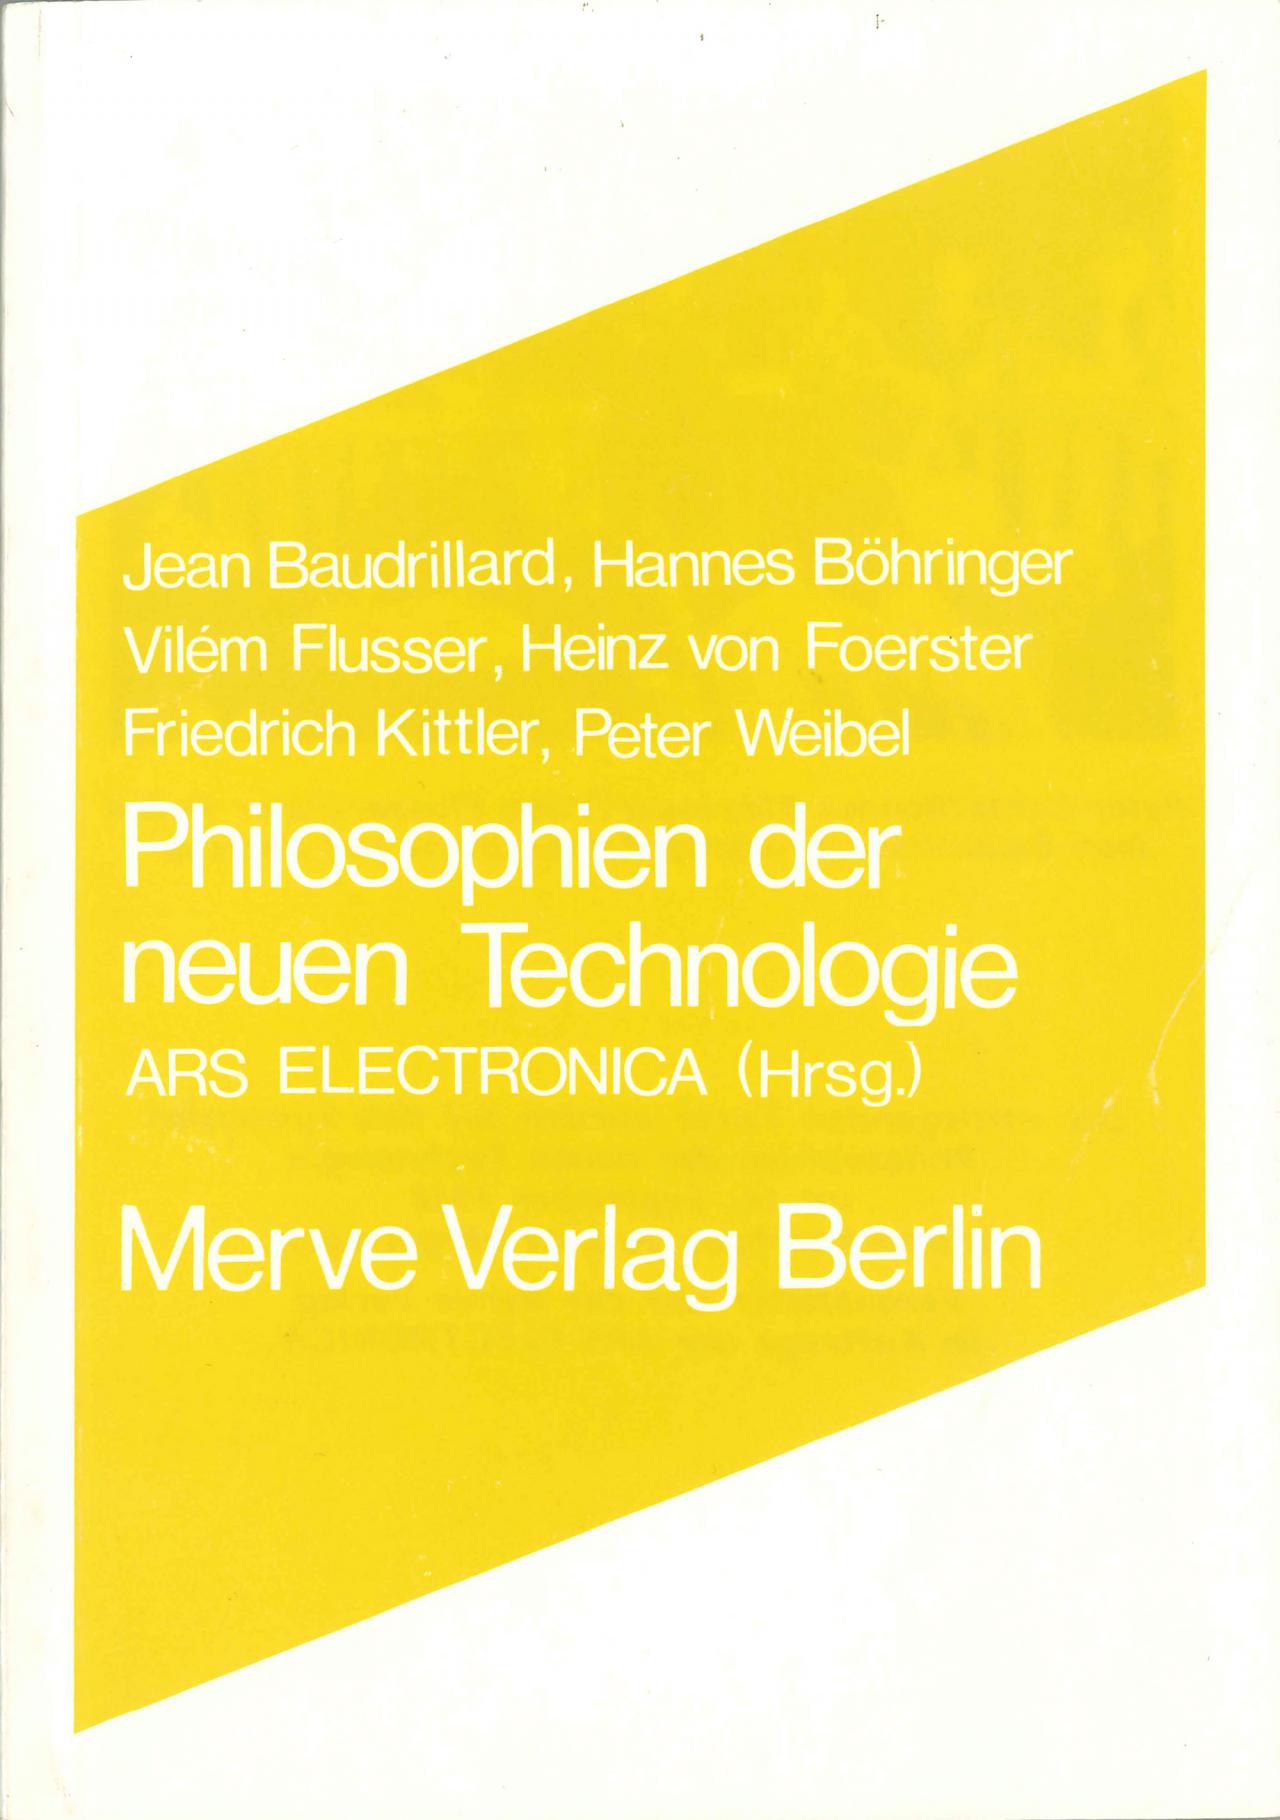 Ars Electronica (Hg.): Philosophien der neuen Technologie, Berlin 1989.